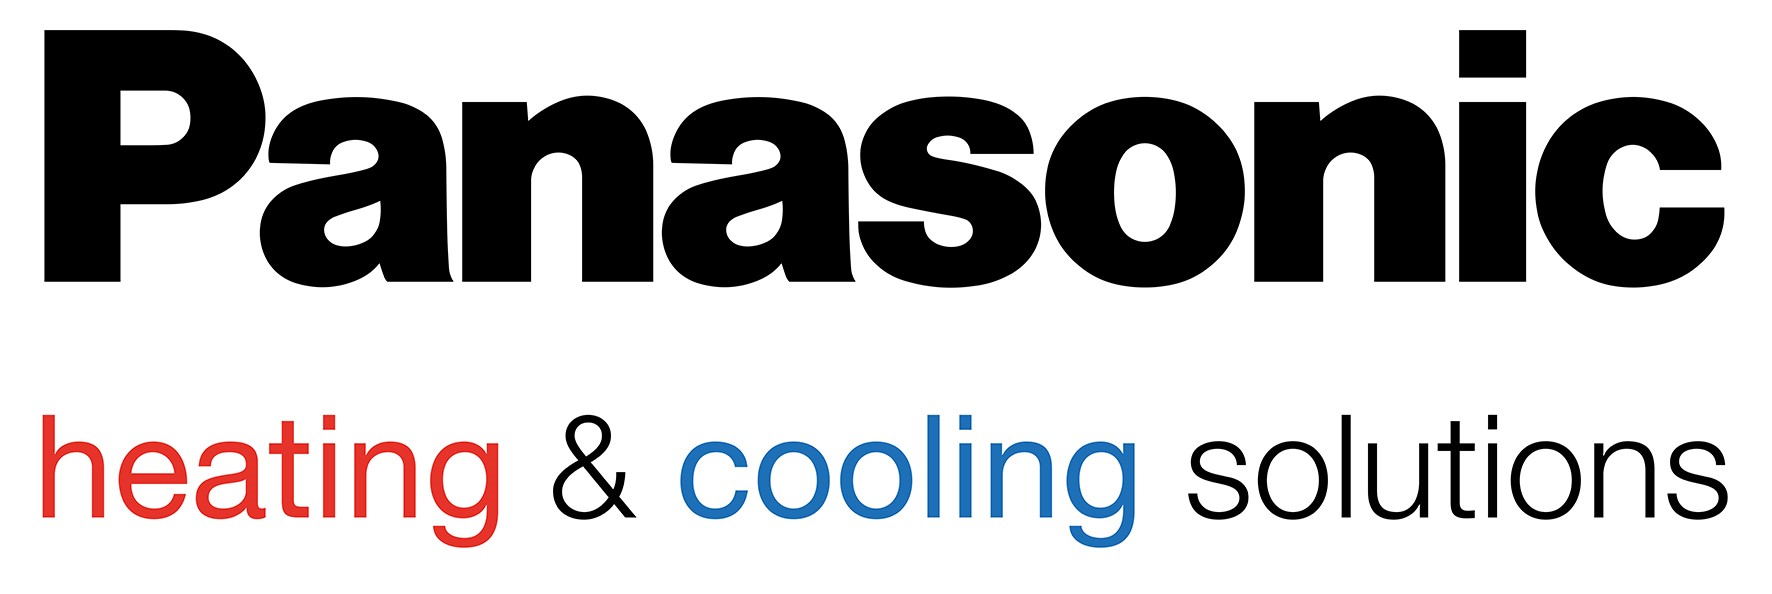 Panasonic Heating & Cooling